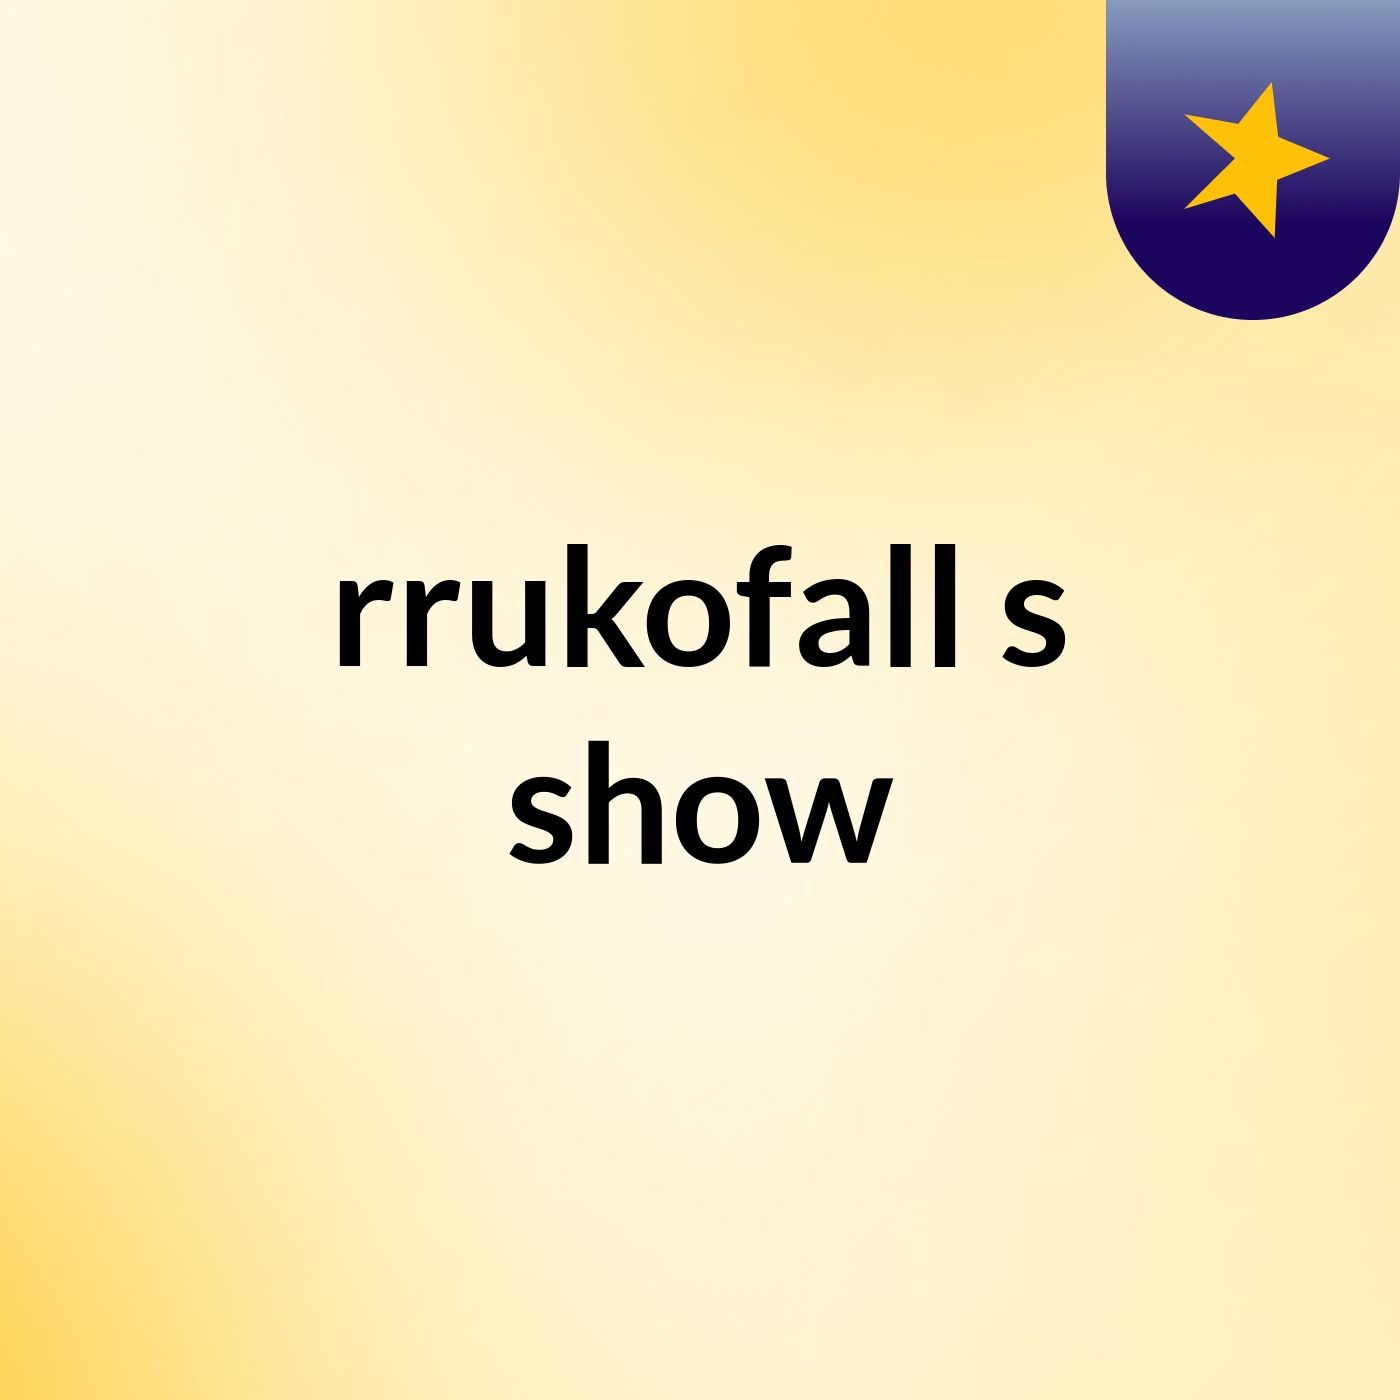 rrukofall's show